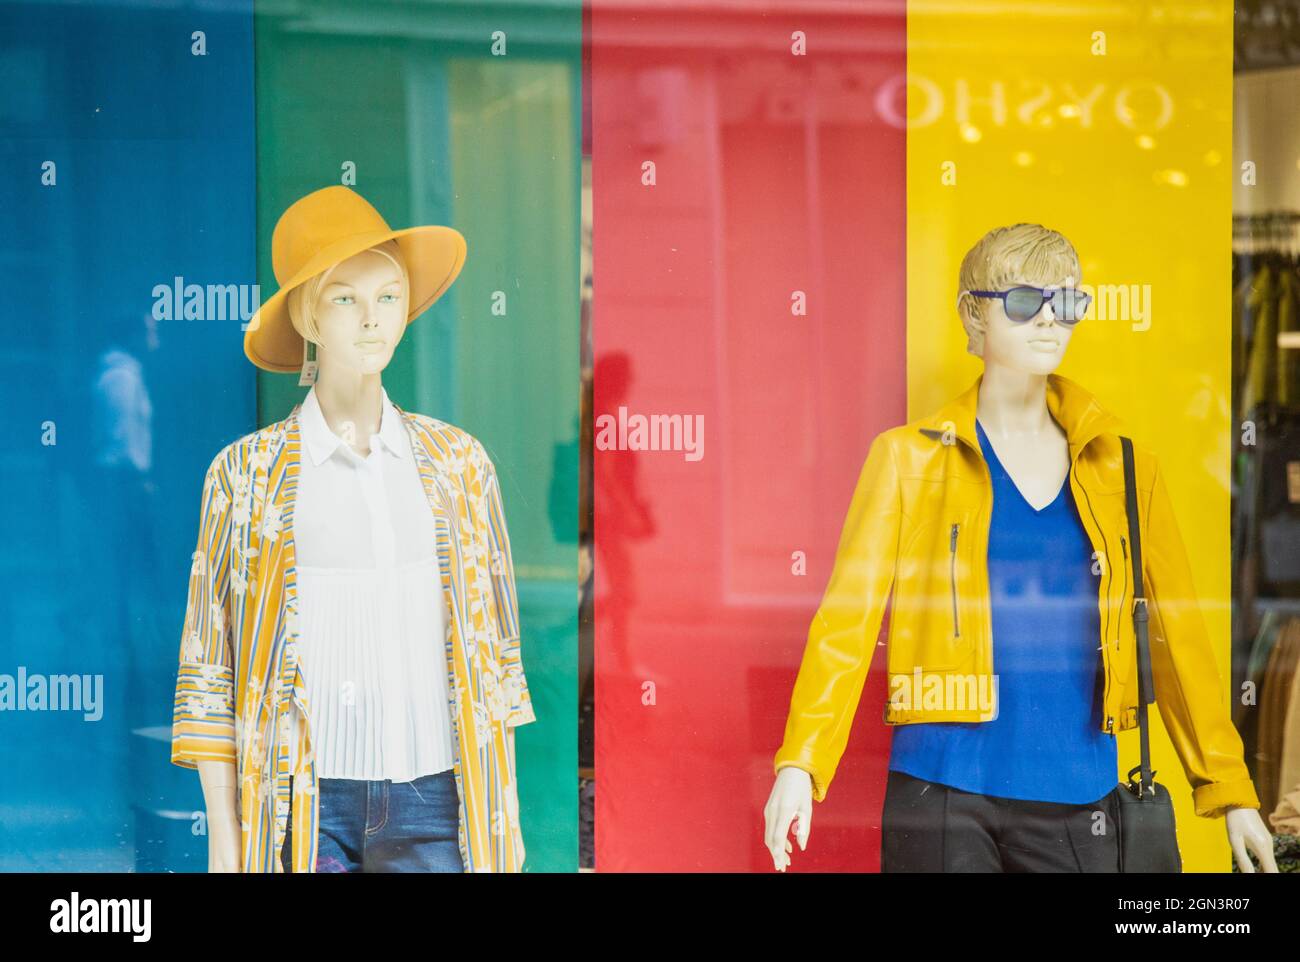 Benetton store in Spain Stock Photo - Alamy